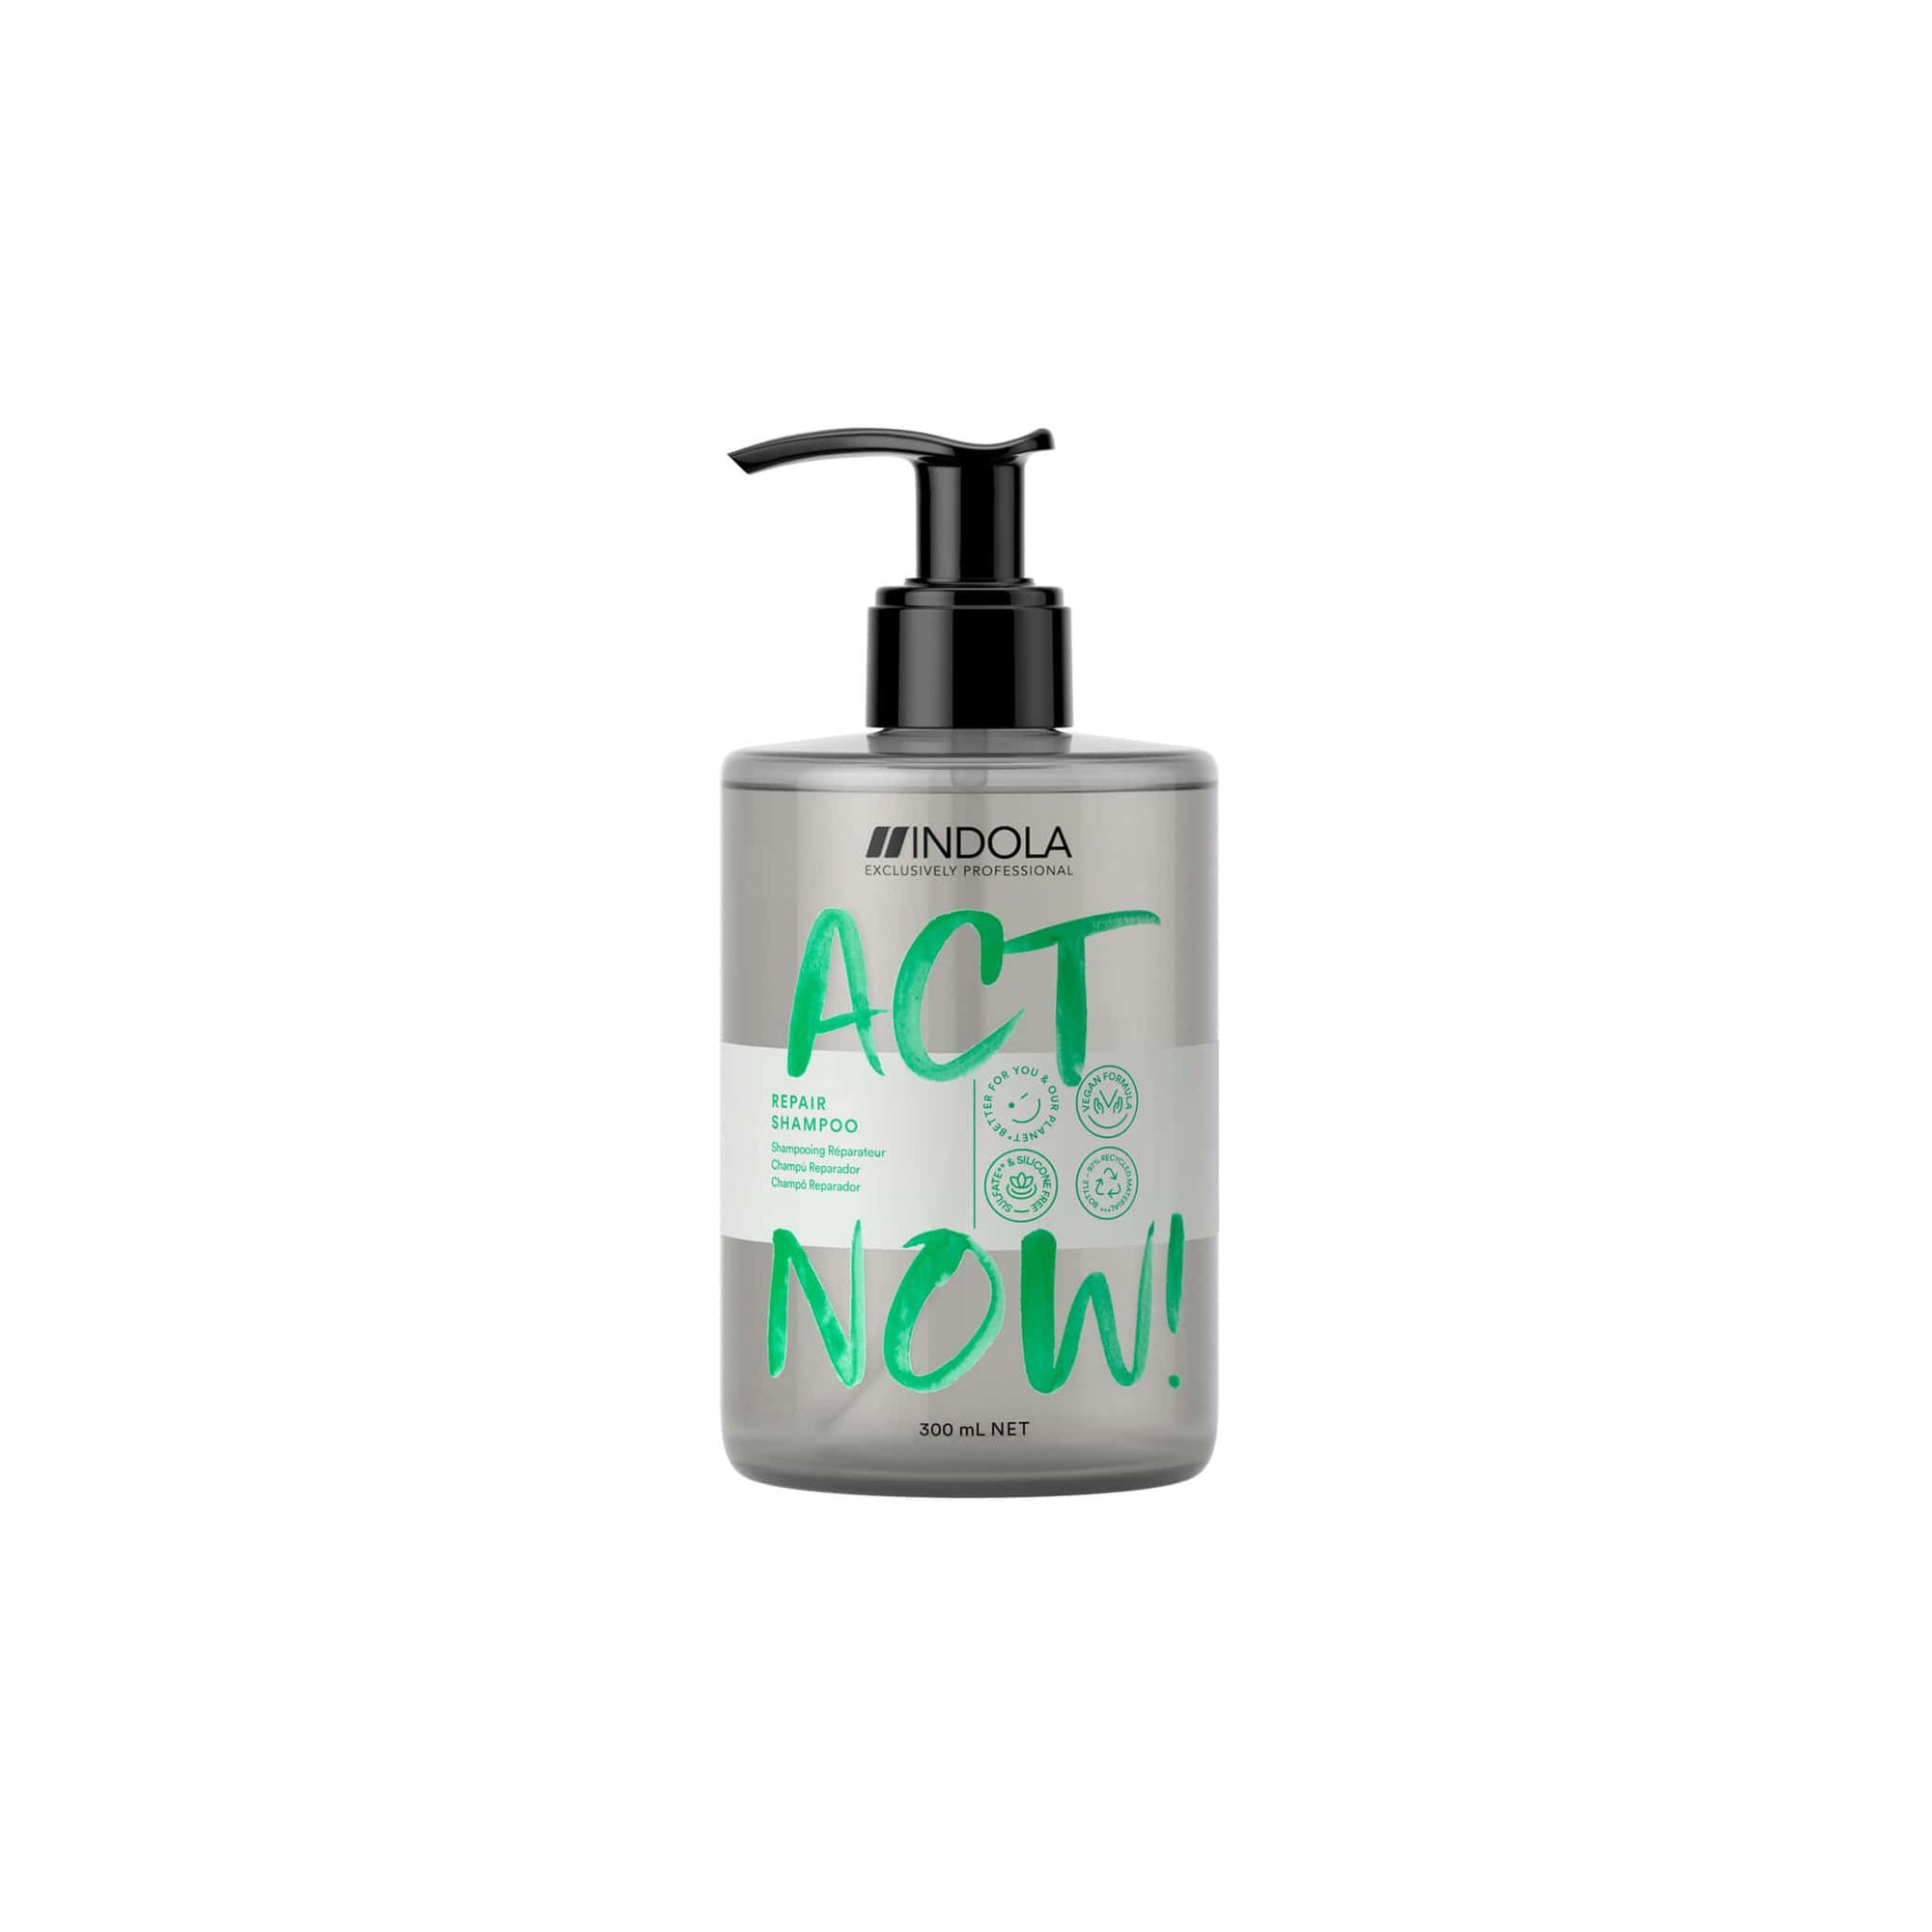 Indola Act Now Repair Shampoo 300ml